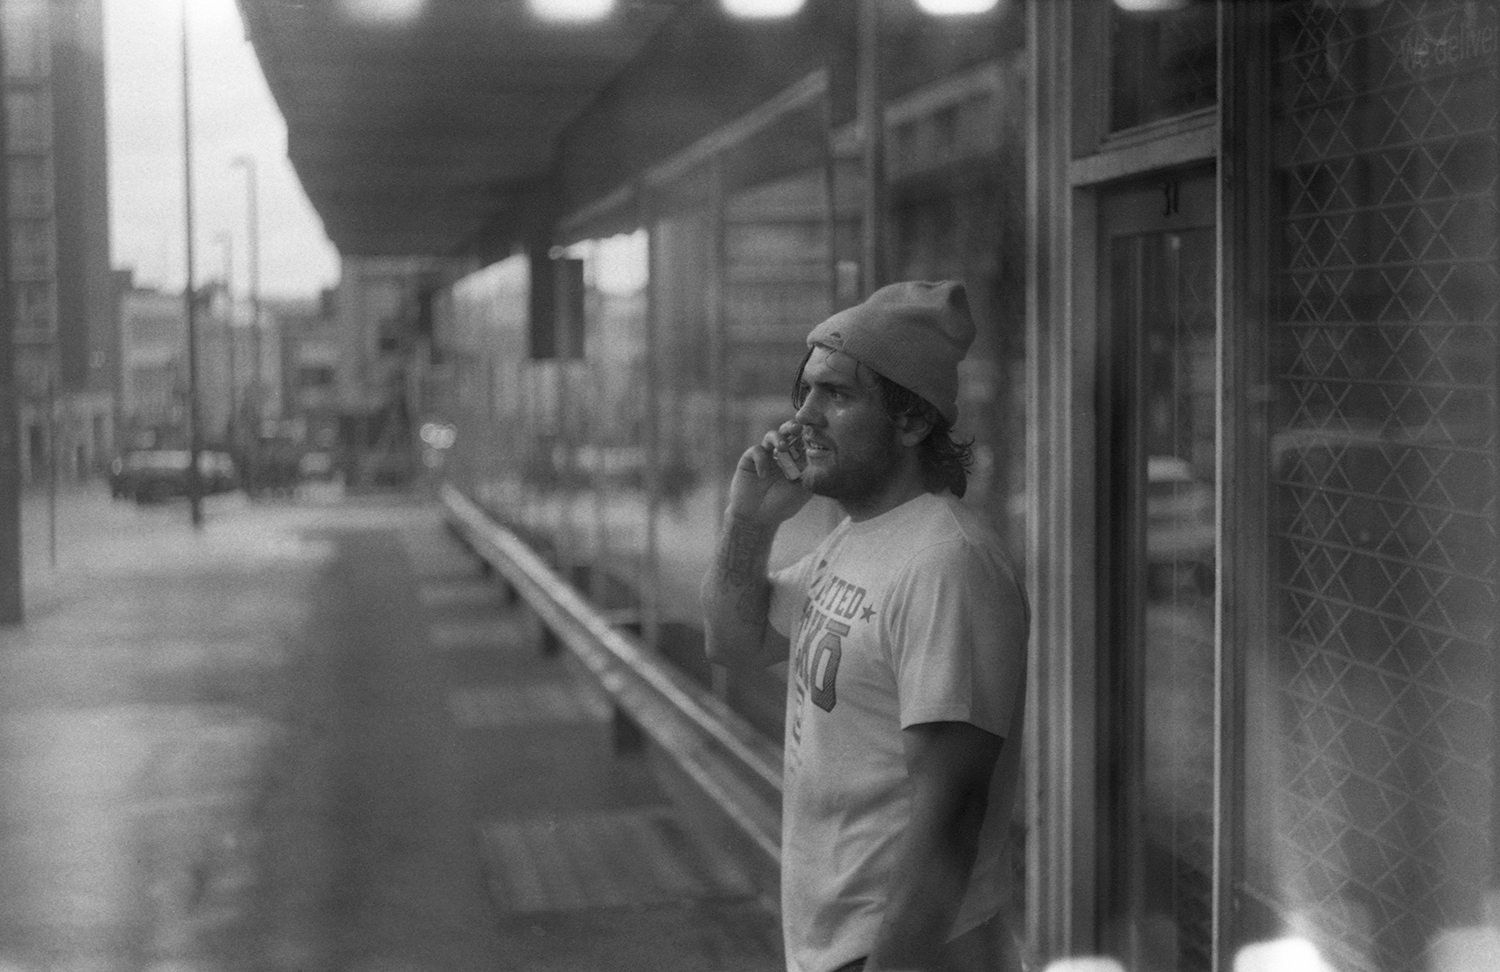 Skate Documentary Photography Shot on Black and White Film